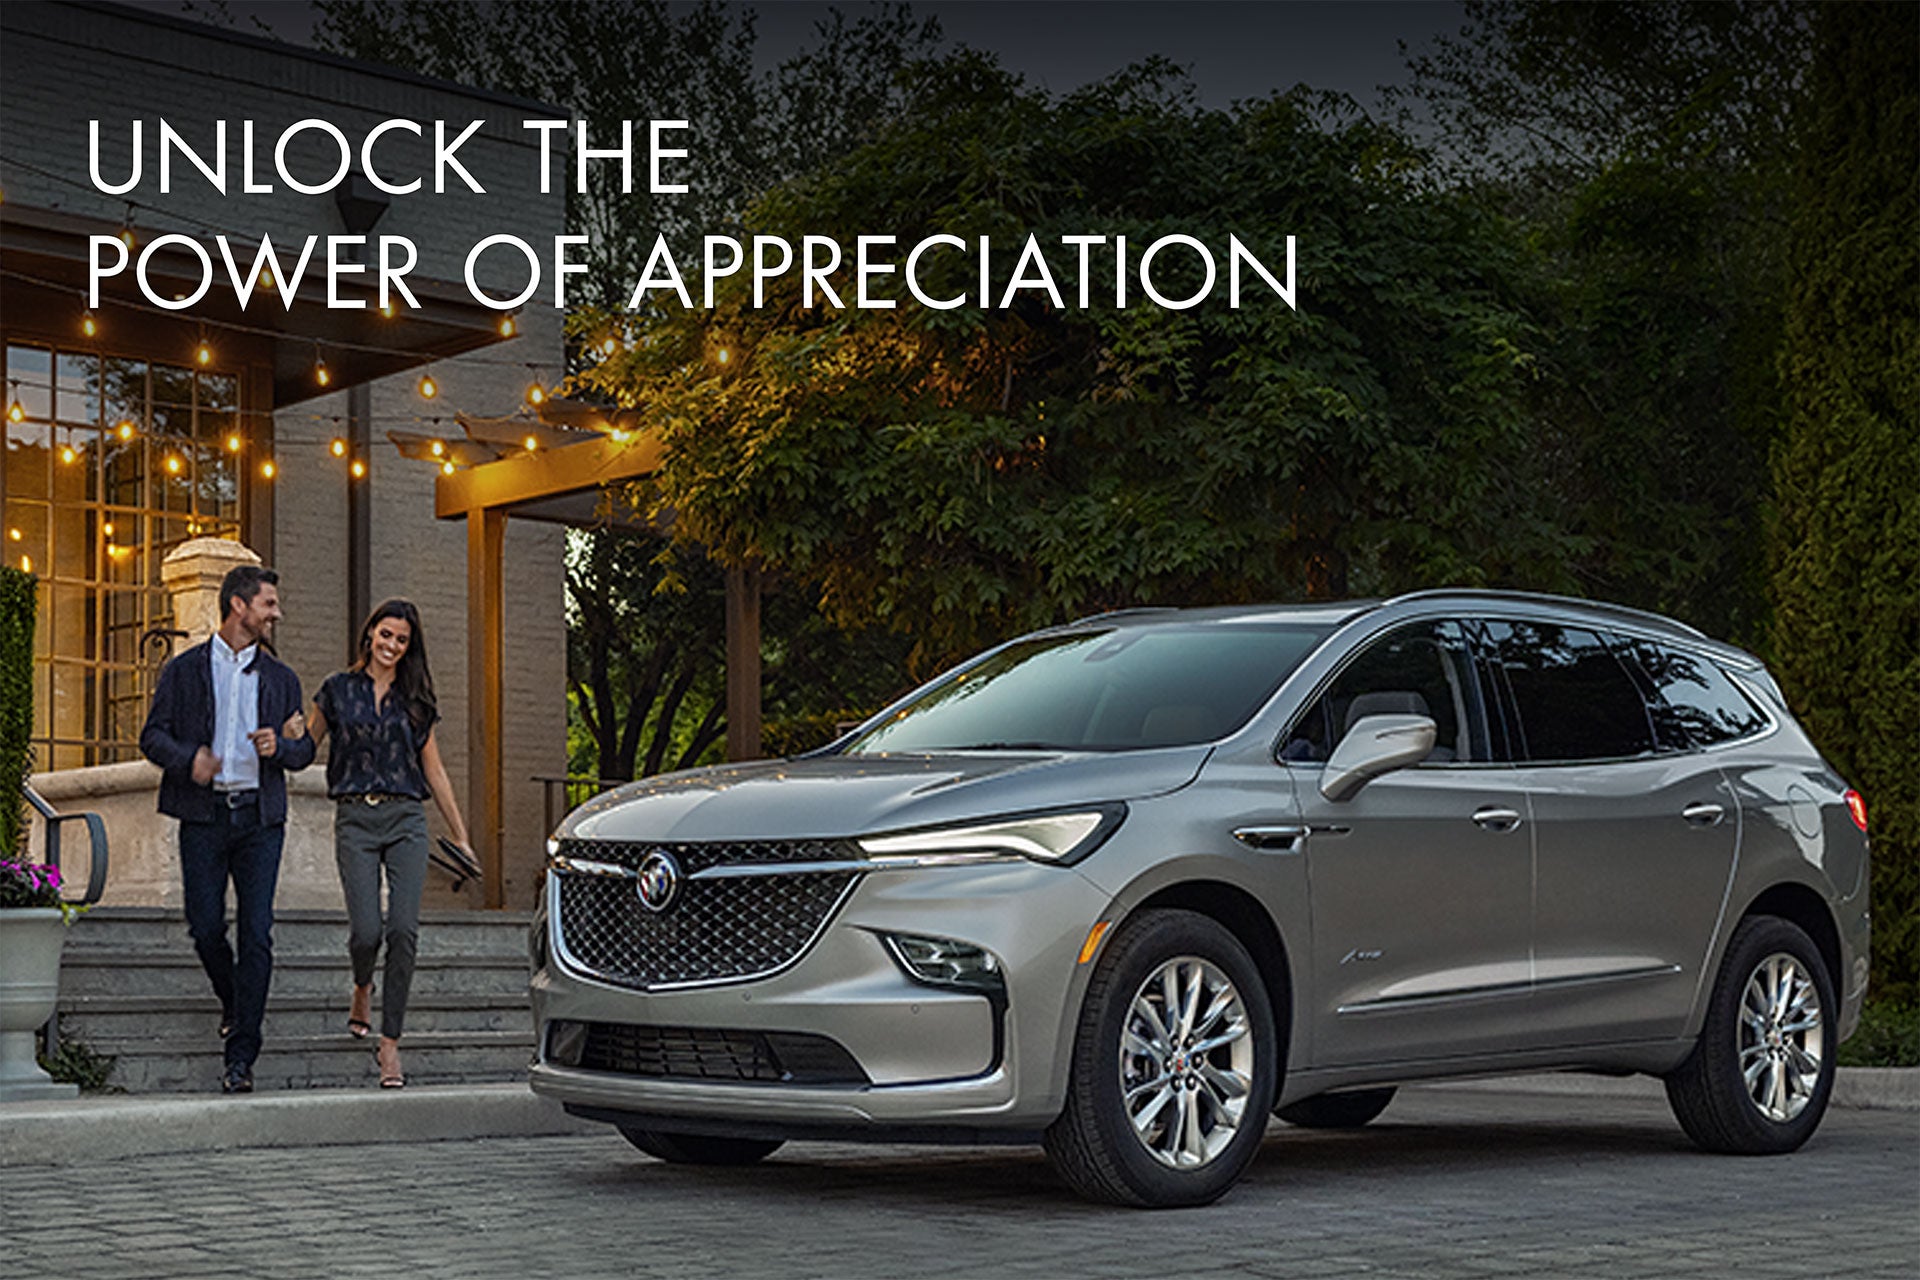 Unlock the power of appreciation | DeMontrond Buick GMC in Houston TX